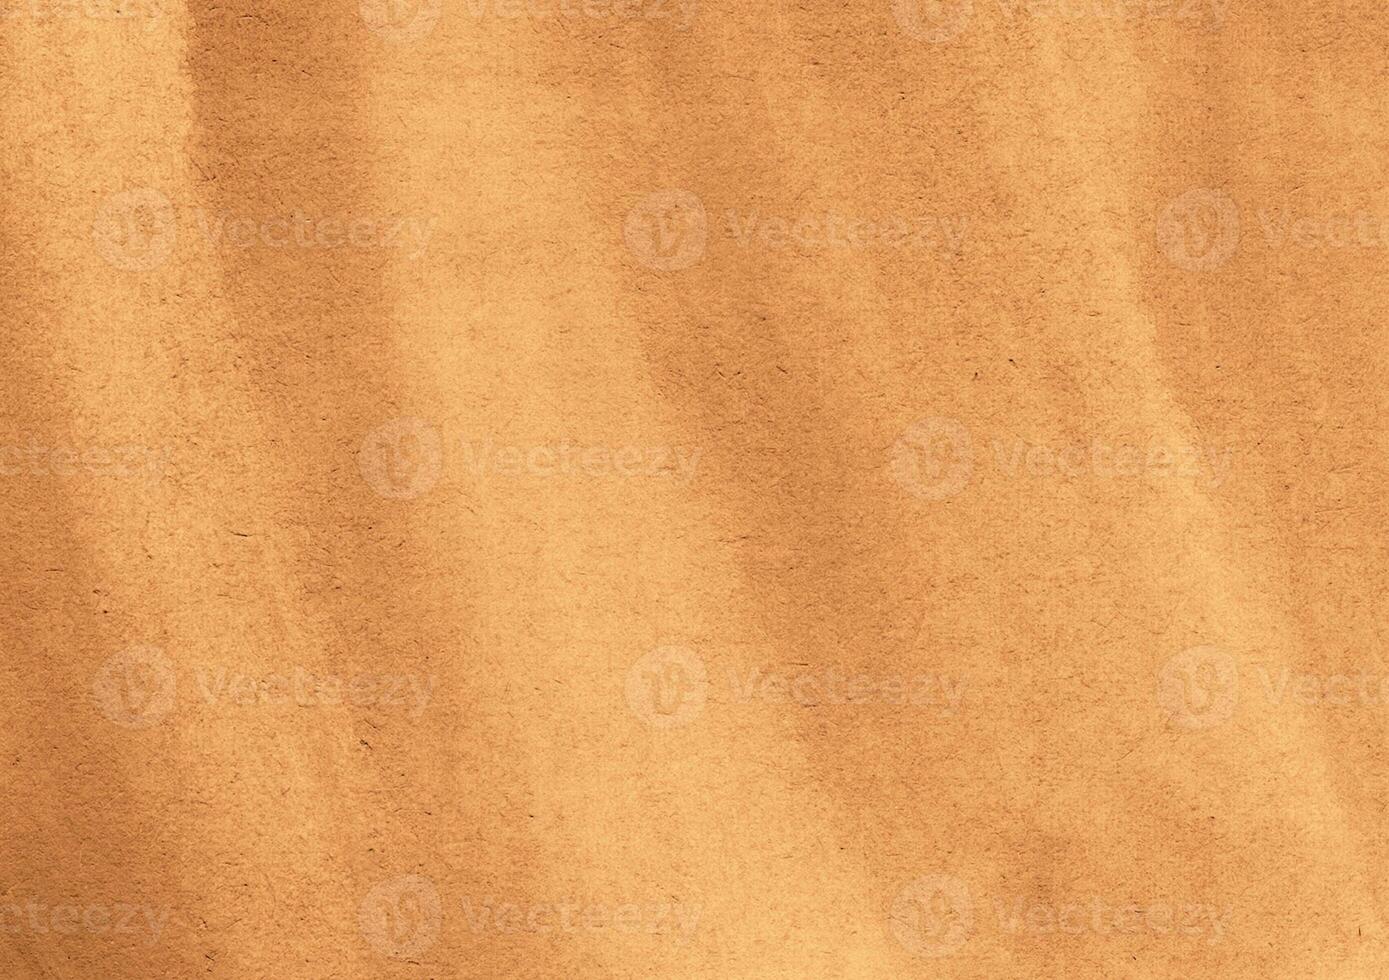 Crumpled brown kraft paper texture banner background photo